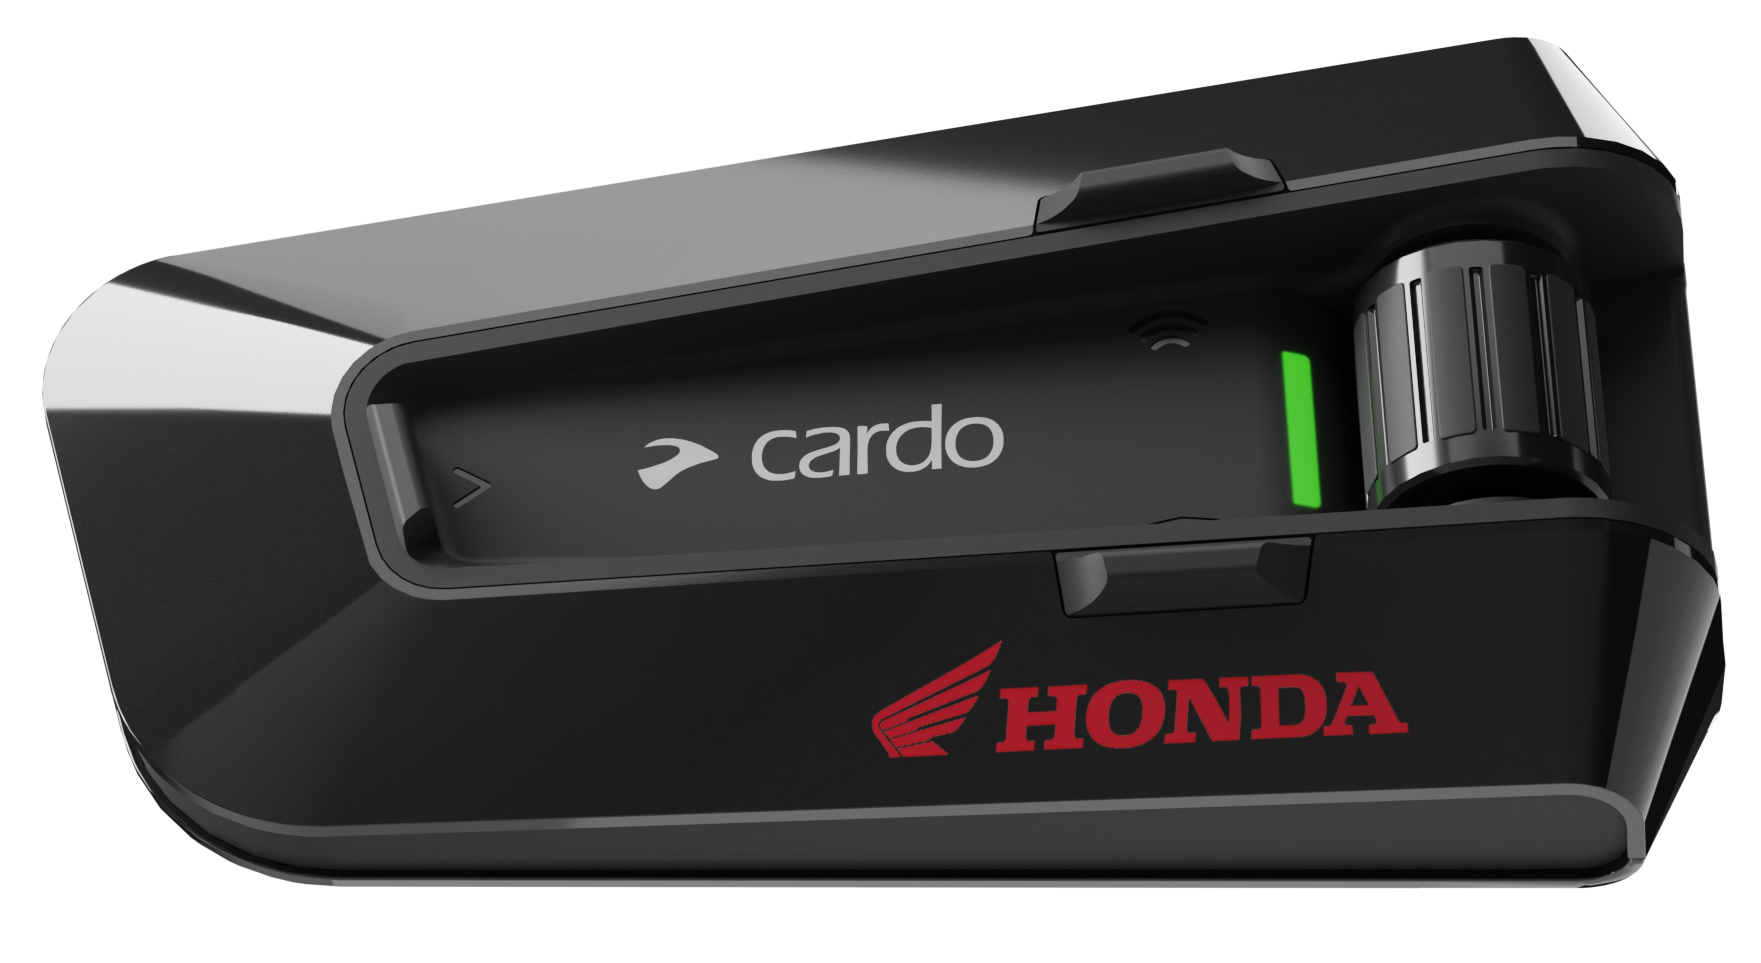 Kit Bluetooth Cardo Packtalk Edge Edition Honda en Stock